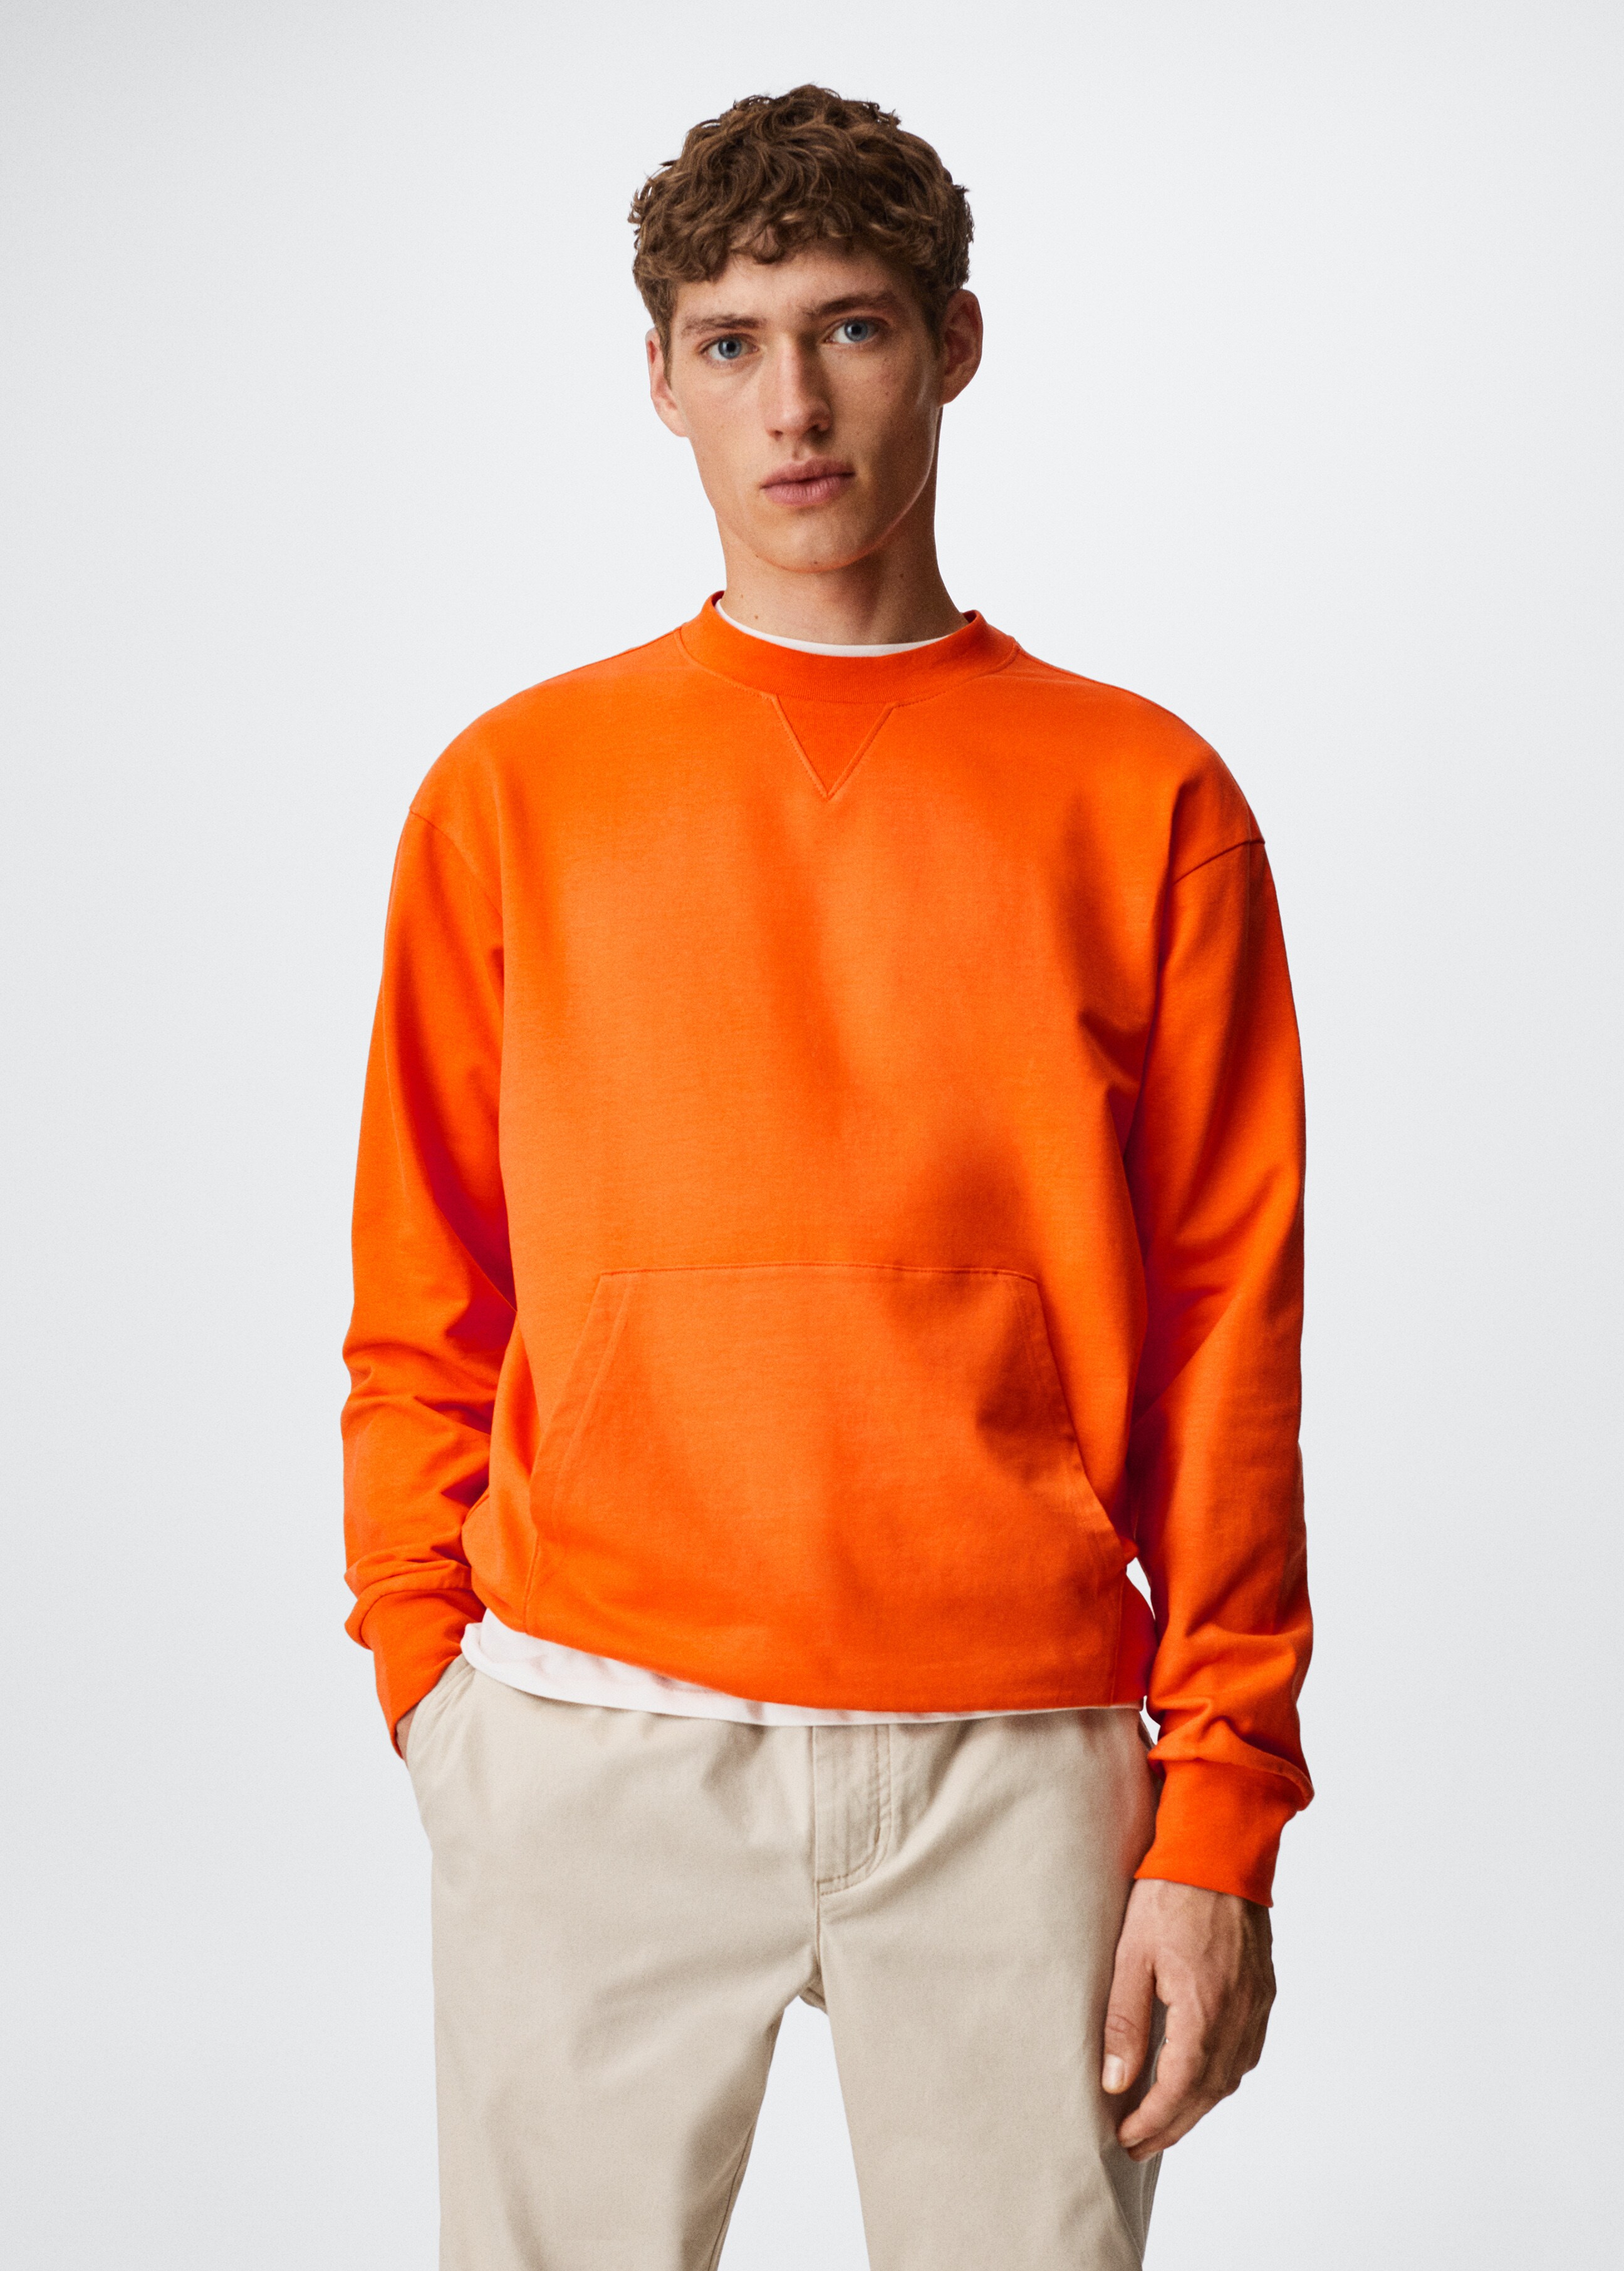 Pocket cotton sweatshirt - Medium plane